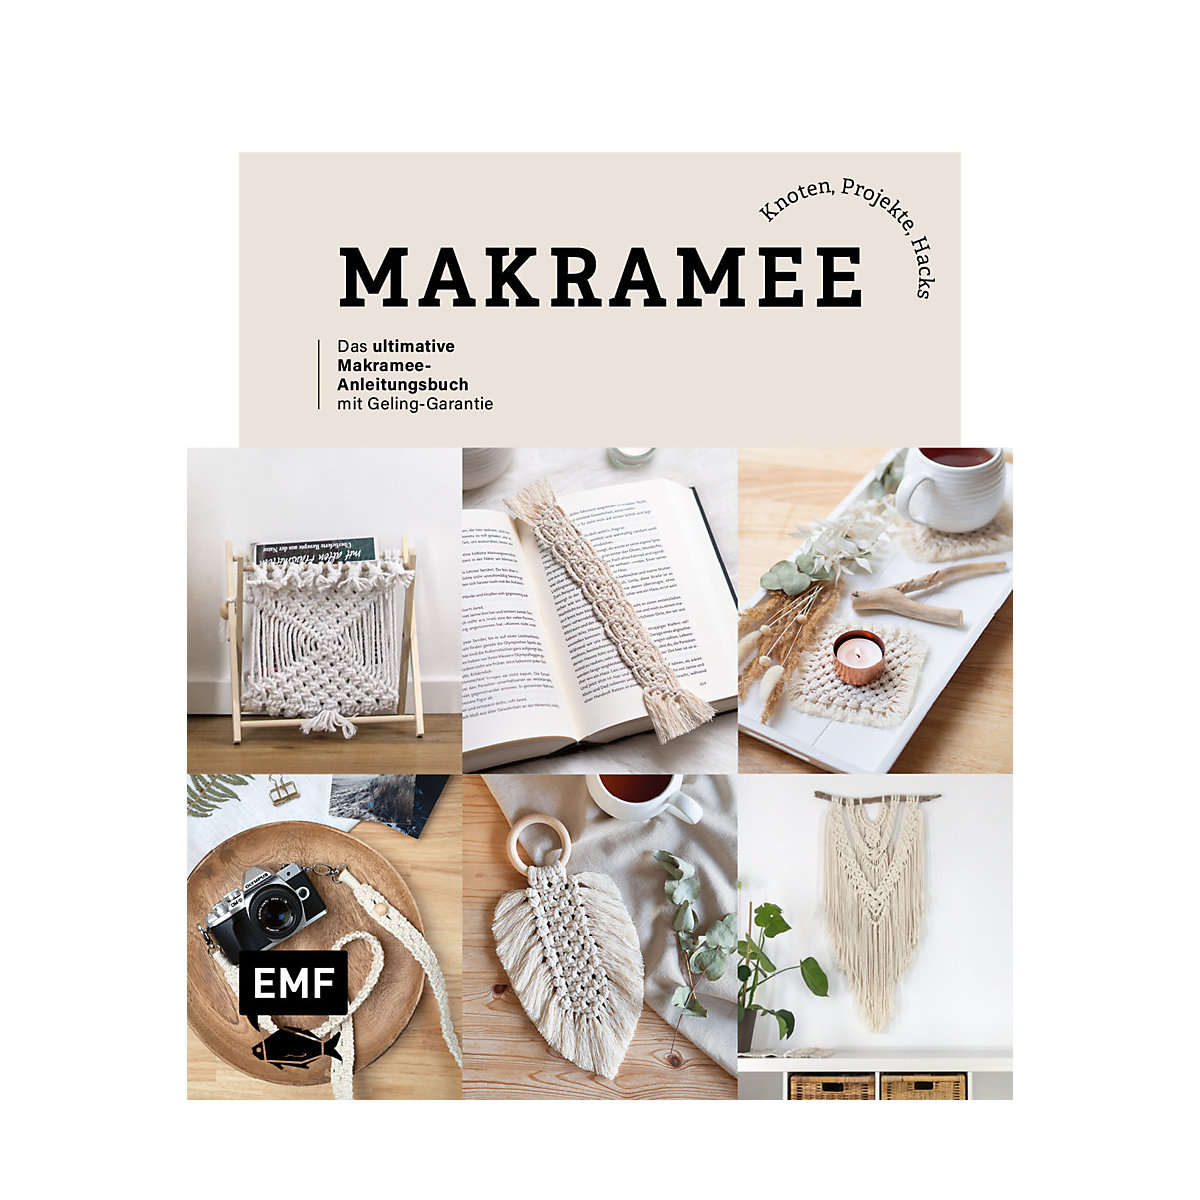 Makramee: Knoten Projekte Hacks Das ultimative Makramee-Anleitungsbuch mit Geling-Garantie